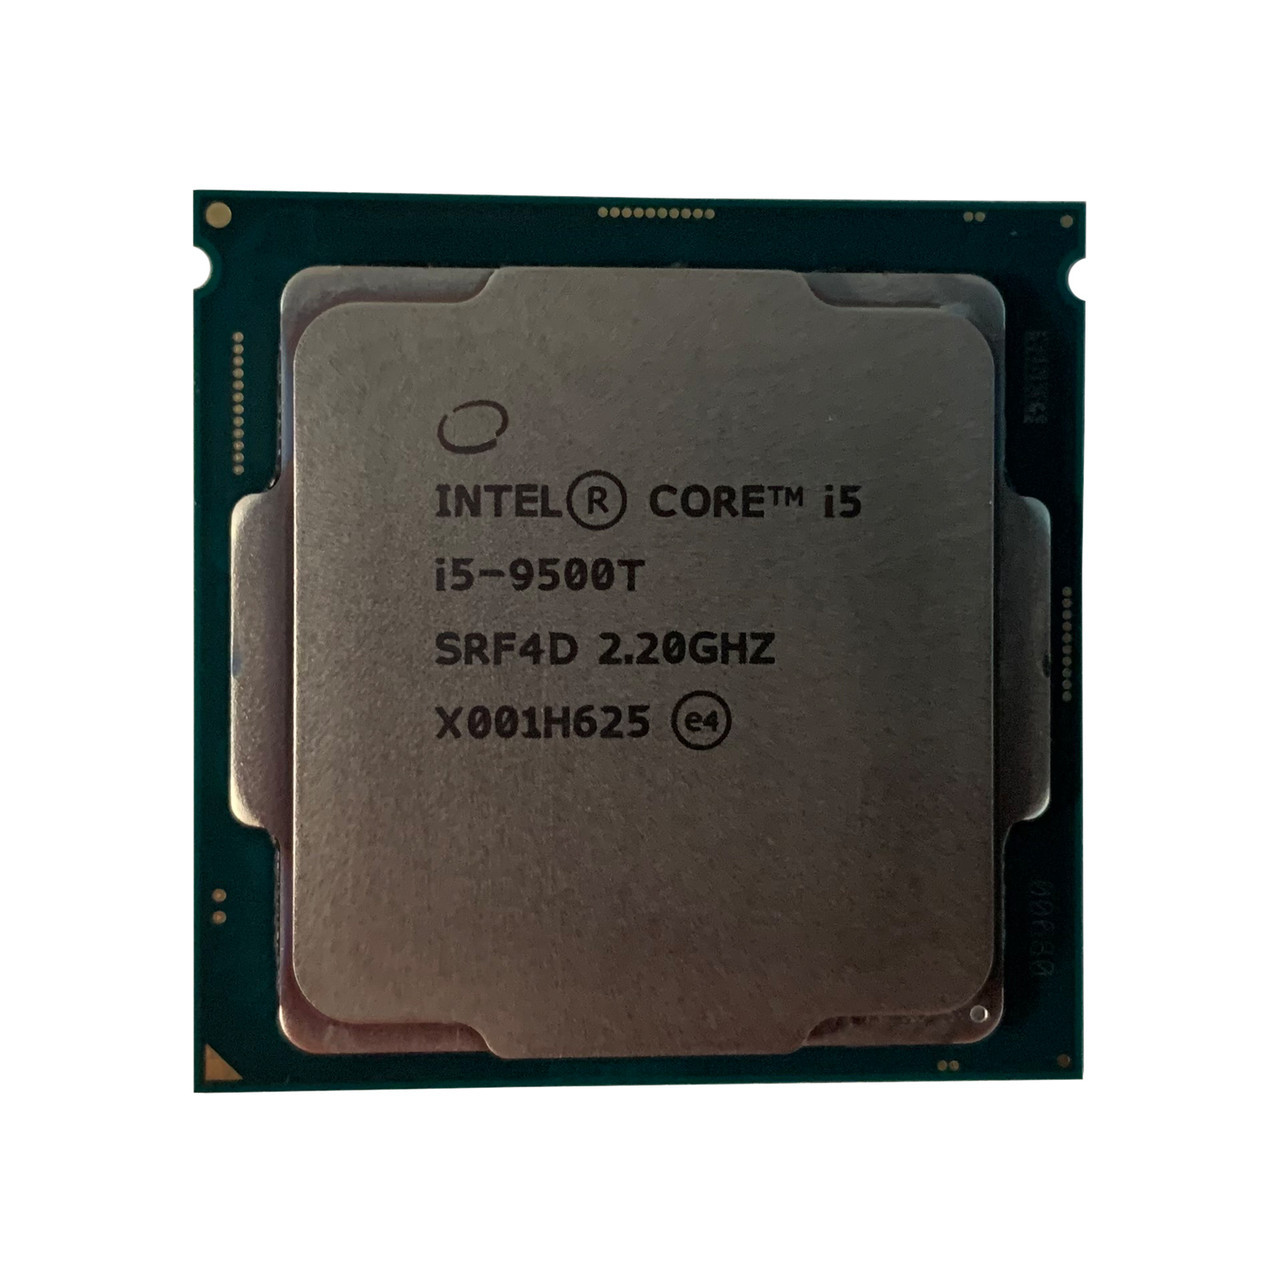 Intel Core i5-9500T Processor 9M Cache up to 3.70 GHz CPU